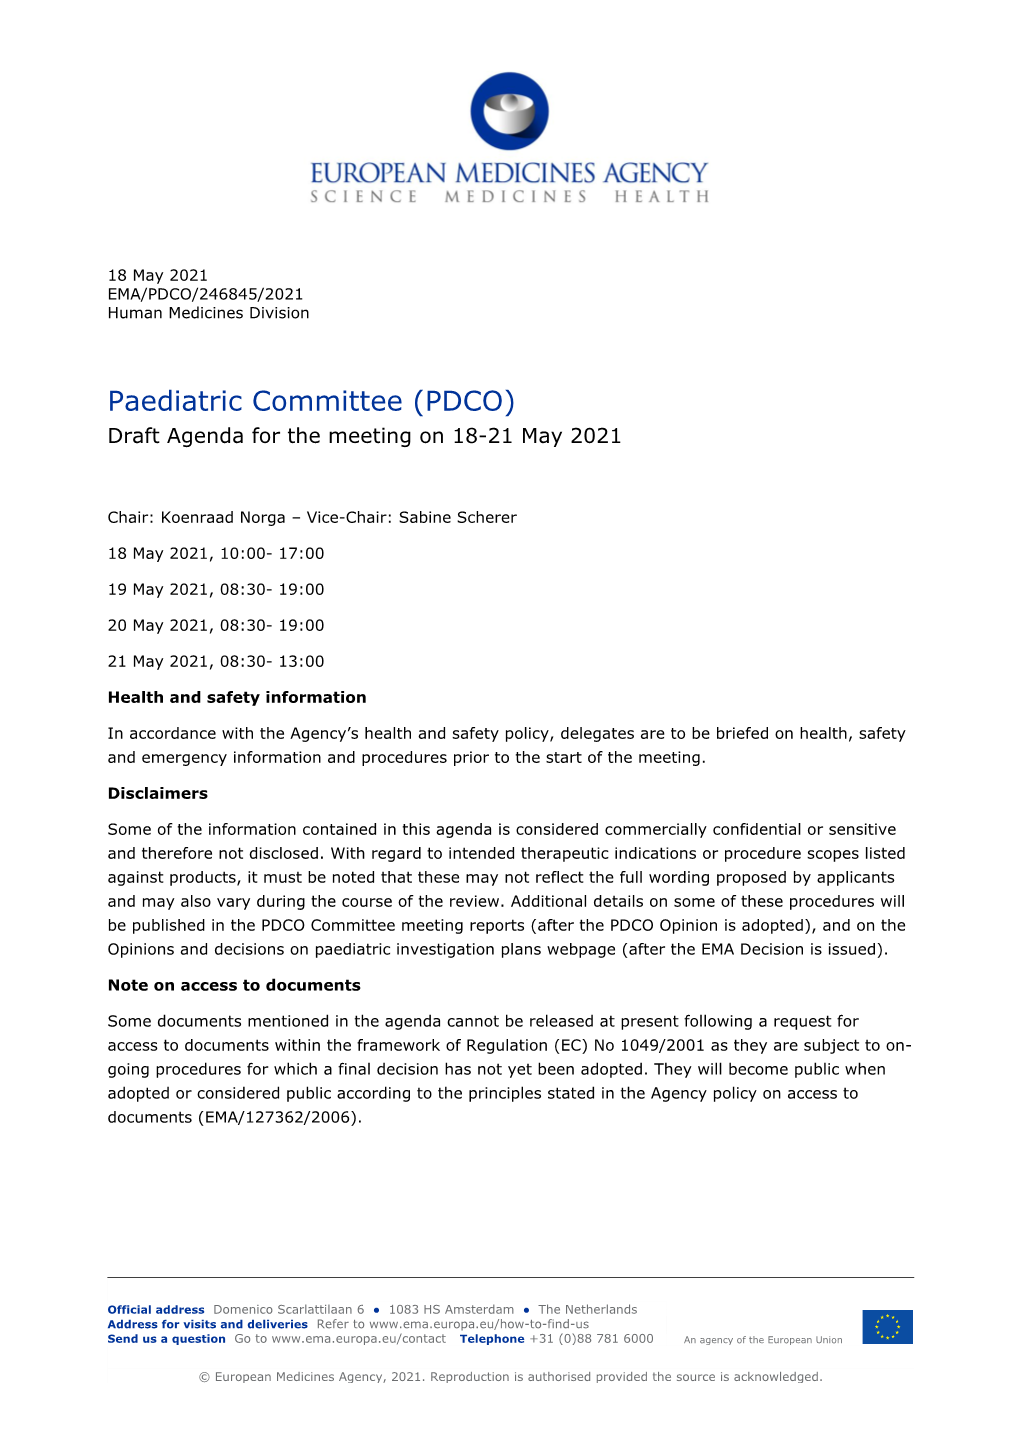 Draft PDCO Agenda 18-21 May 2021